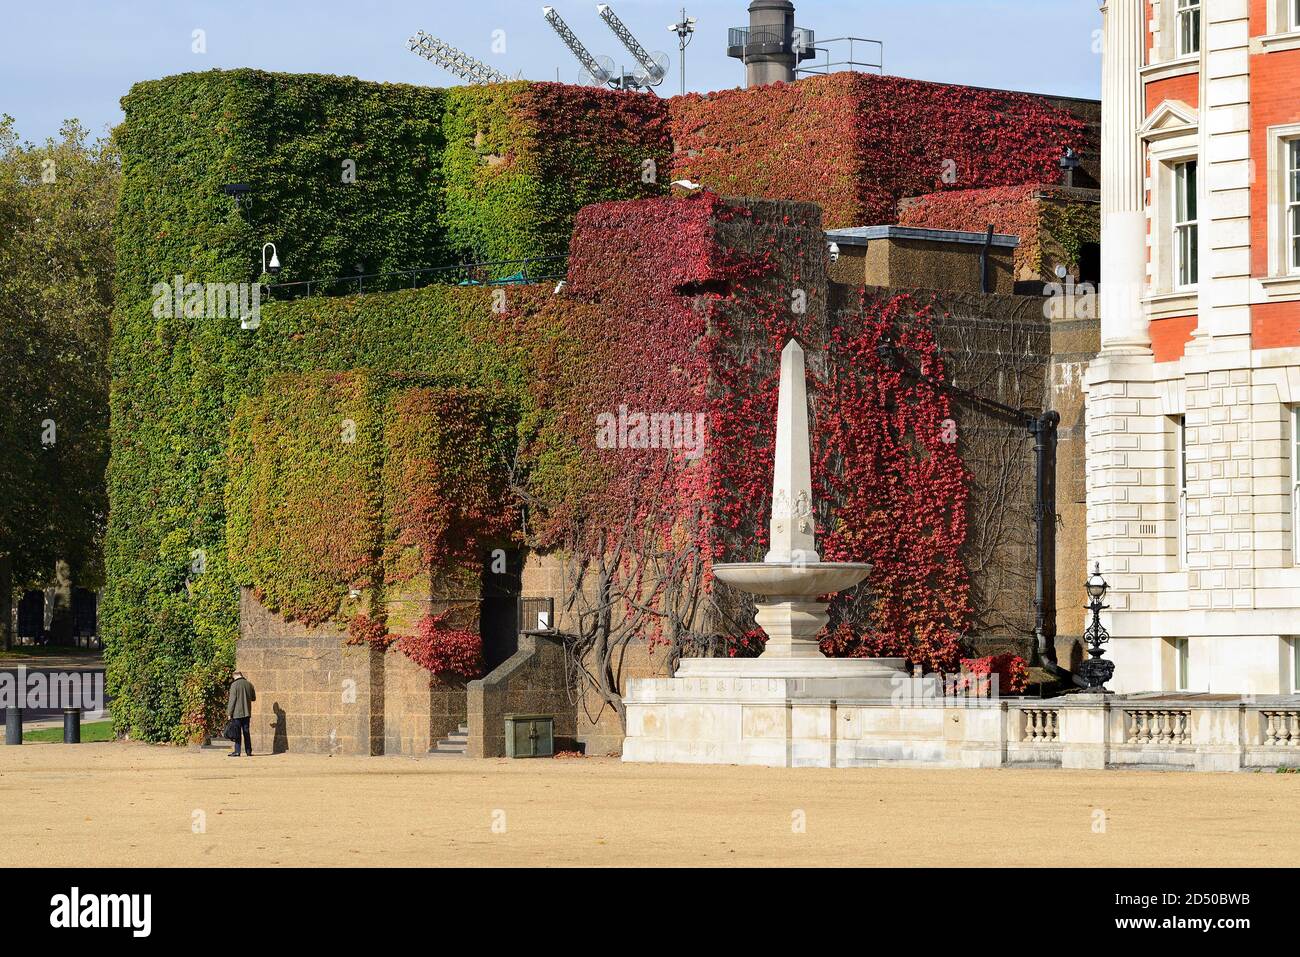 London, England, UK. Horse Guards Parade - Virginia Creeper (Parthenocissus quinquefolia) changes colour as autumn arrives - early October 2020. Royal Stock Photo